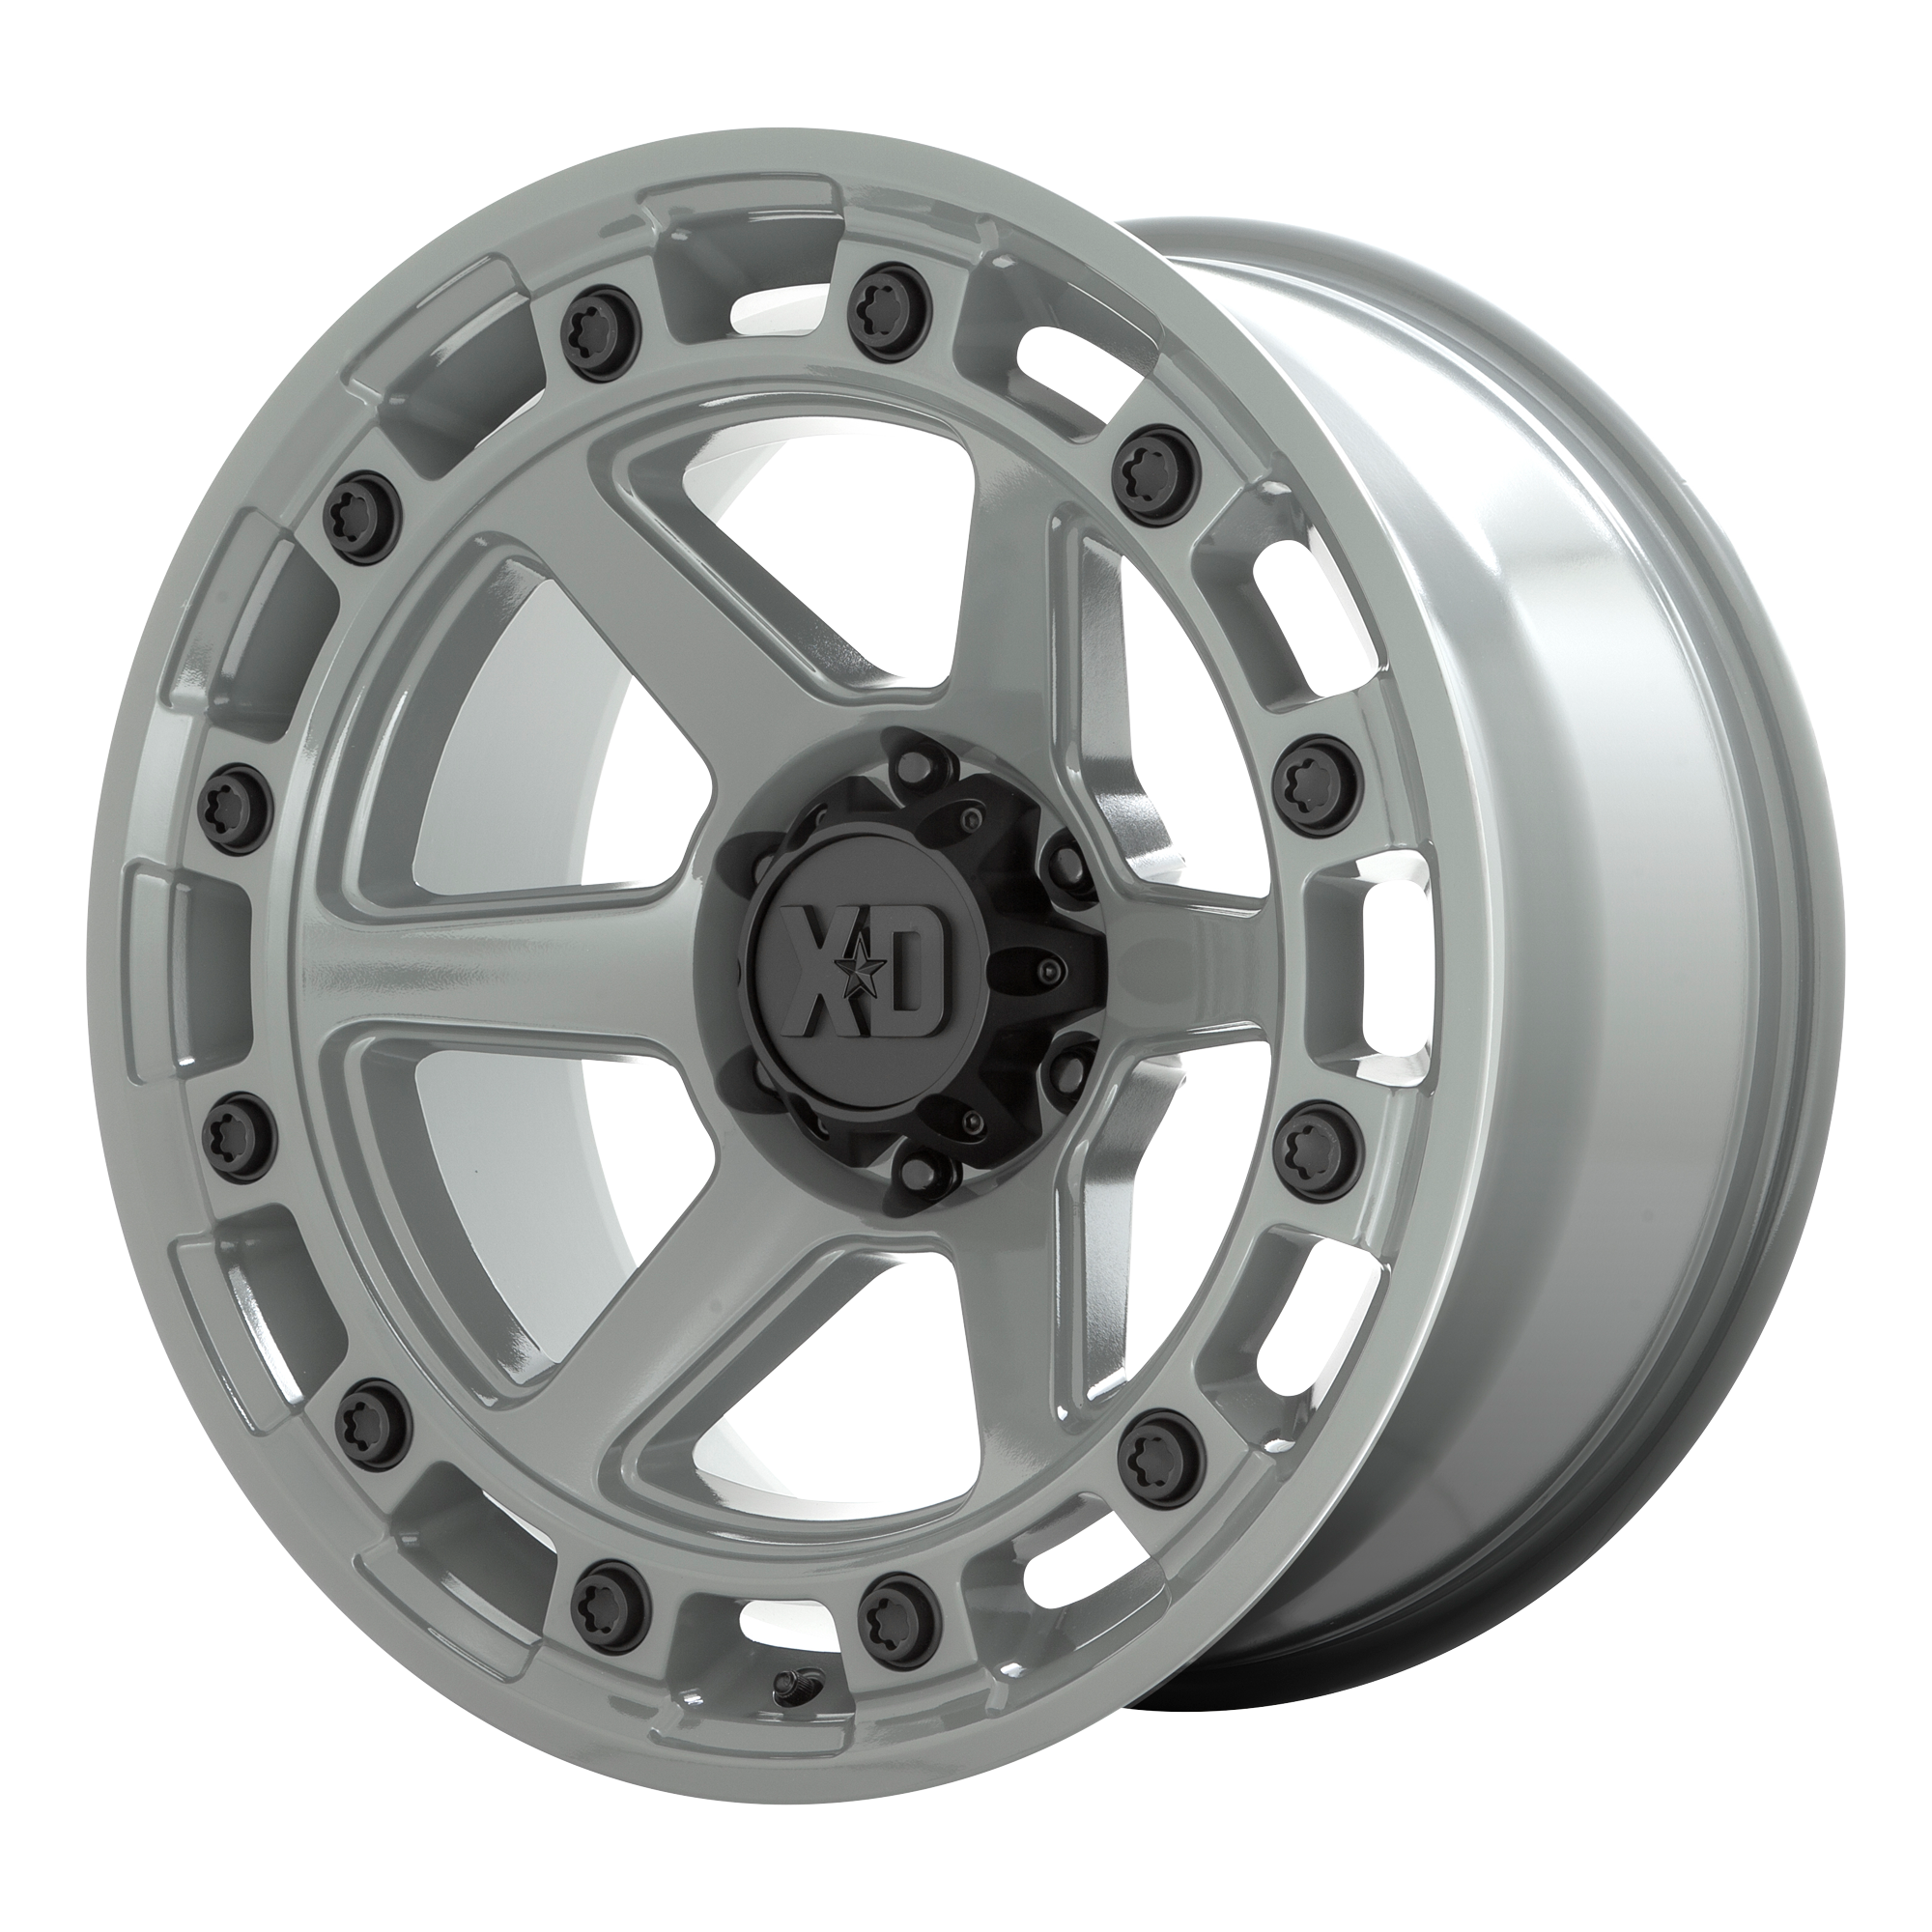 XD 20"x10" Non-Chrome Cement Custom Wheel ARSWCWXD86221063418N